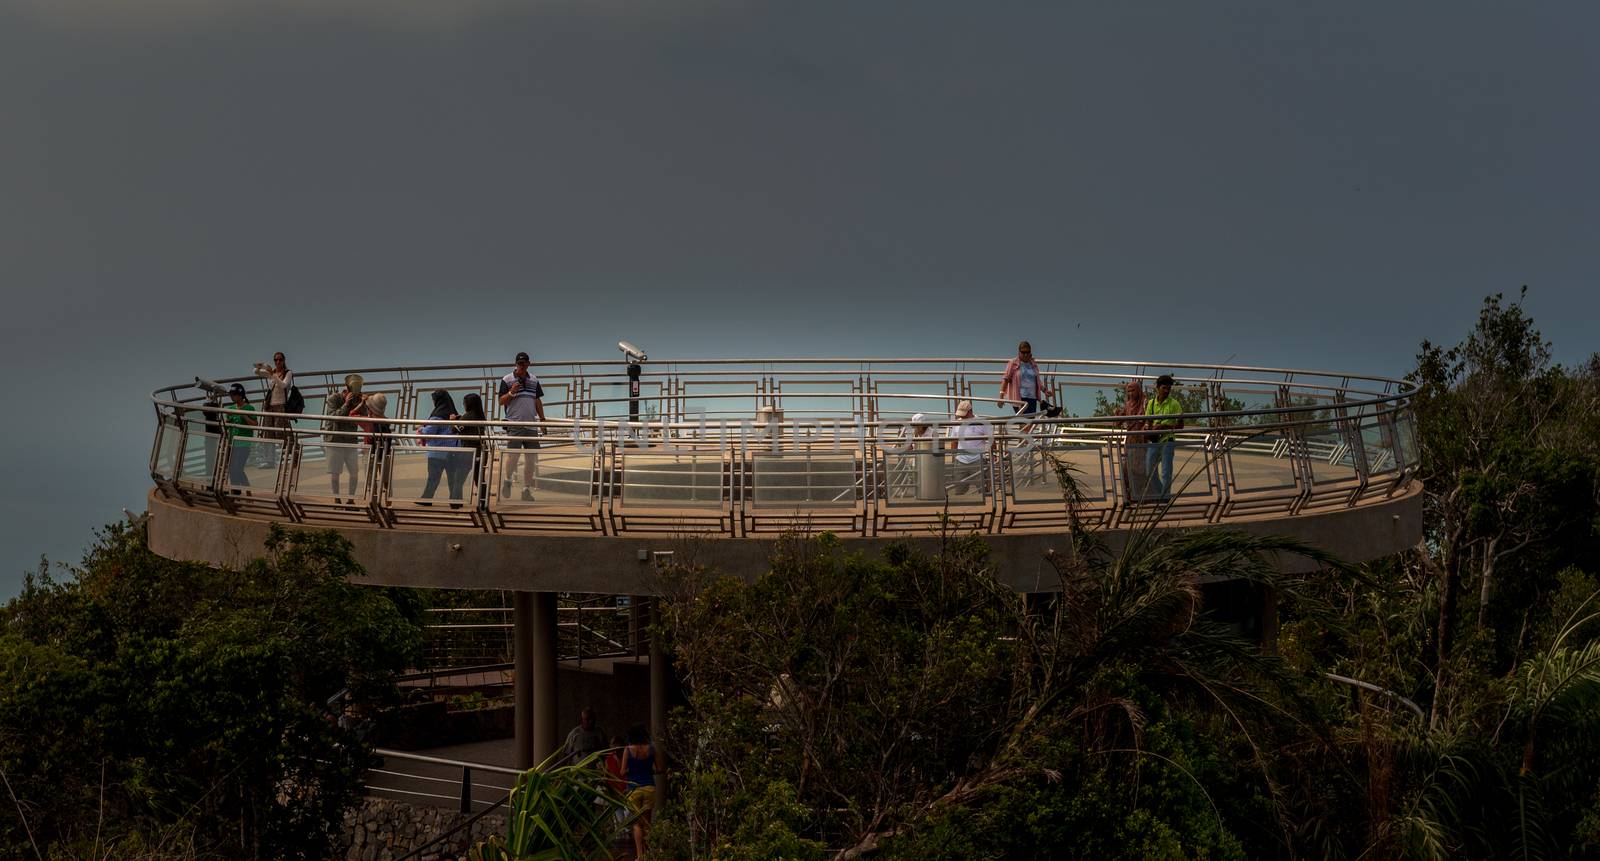 Observation Post by the Langkawi Sky Bridge by jfbenning